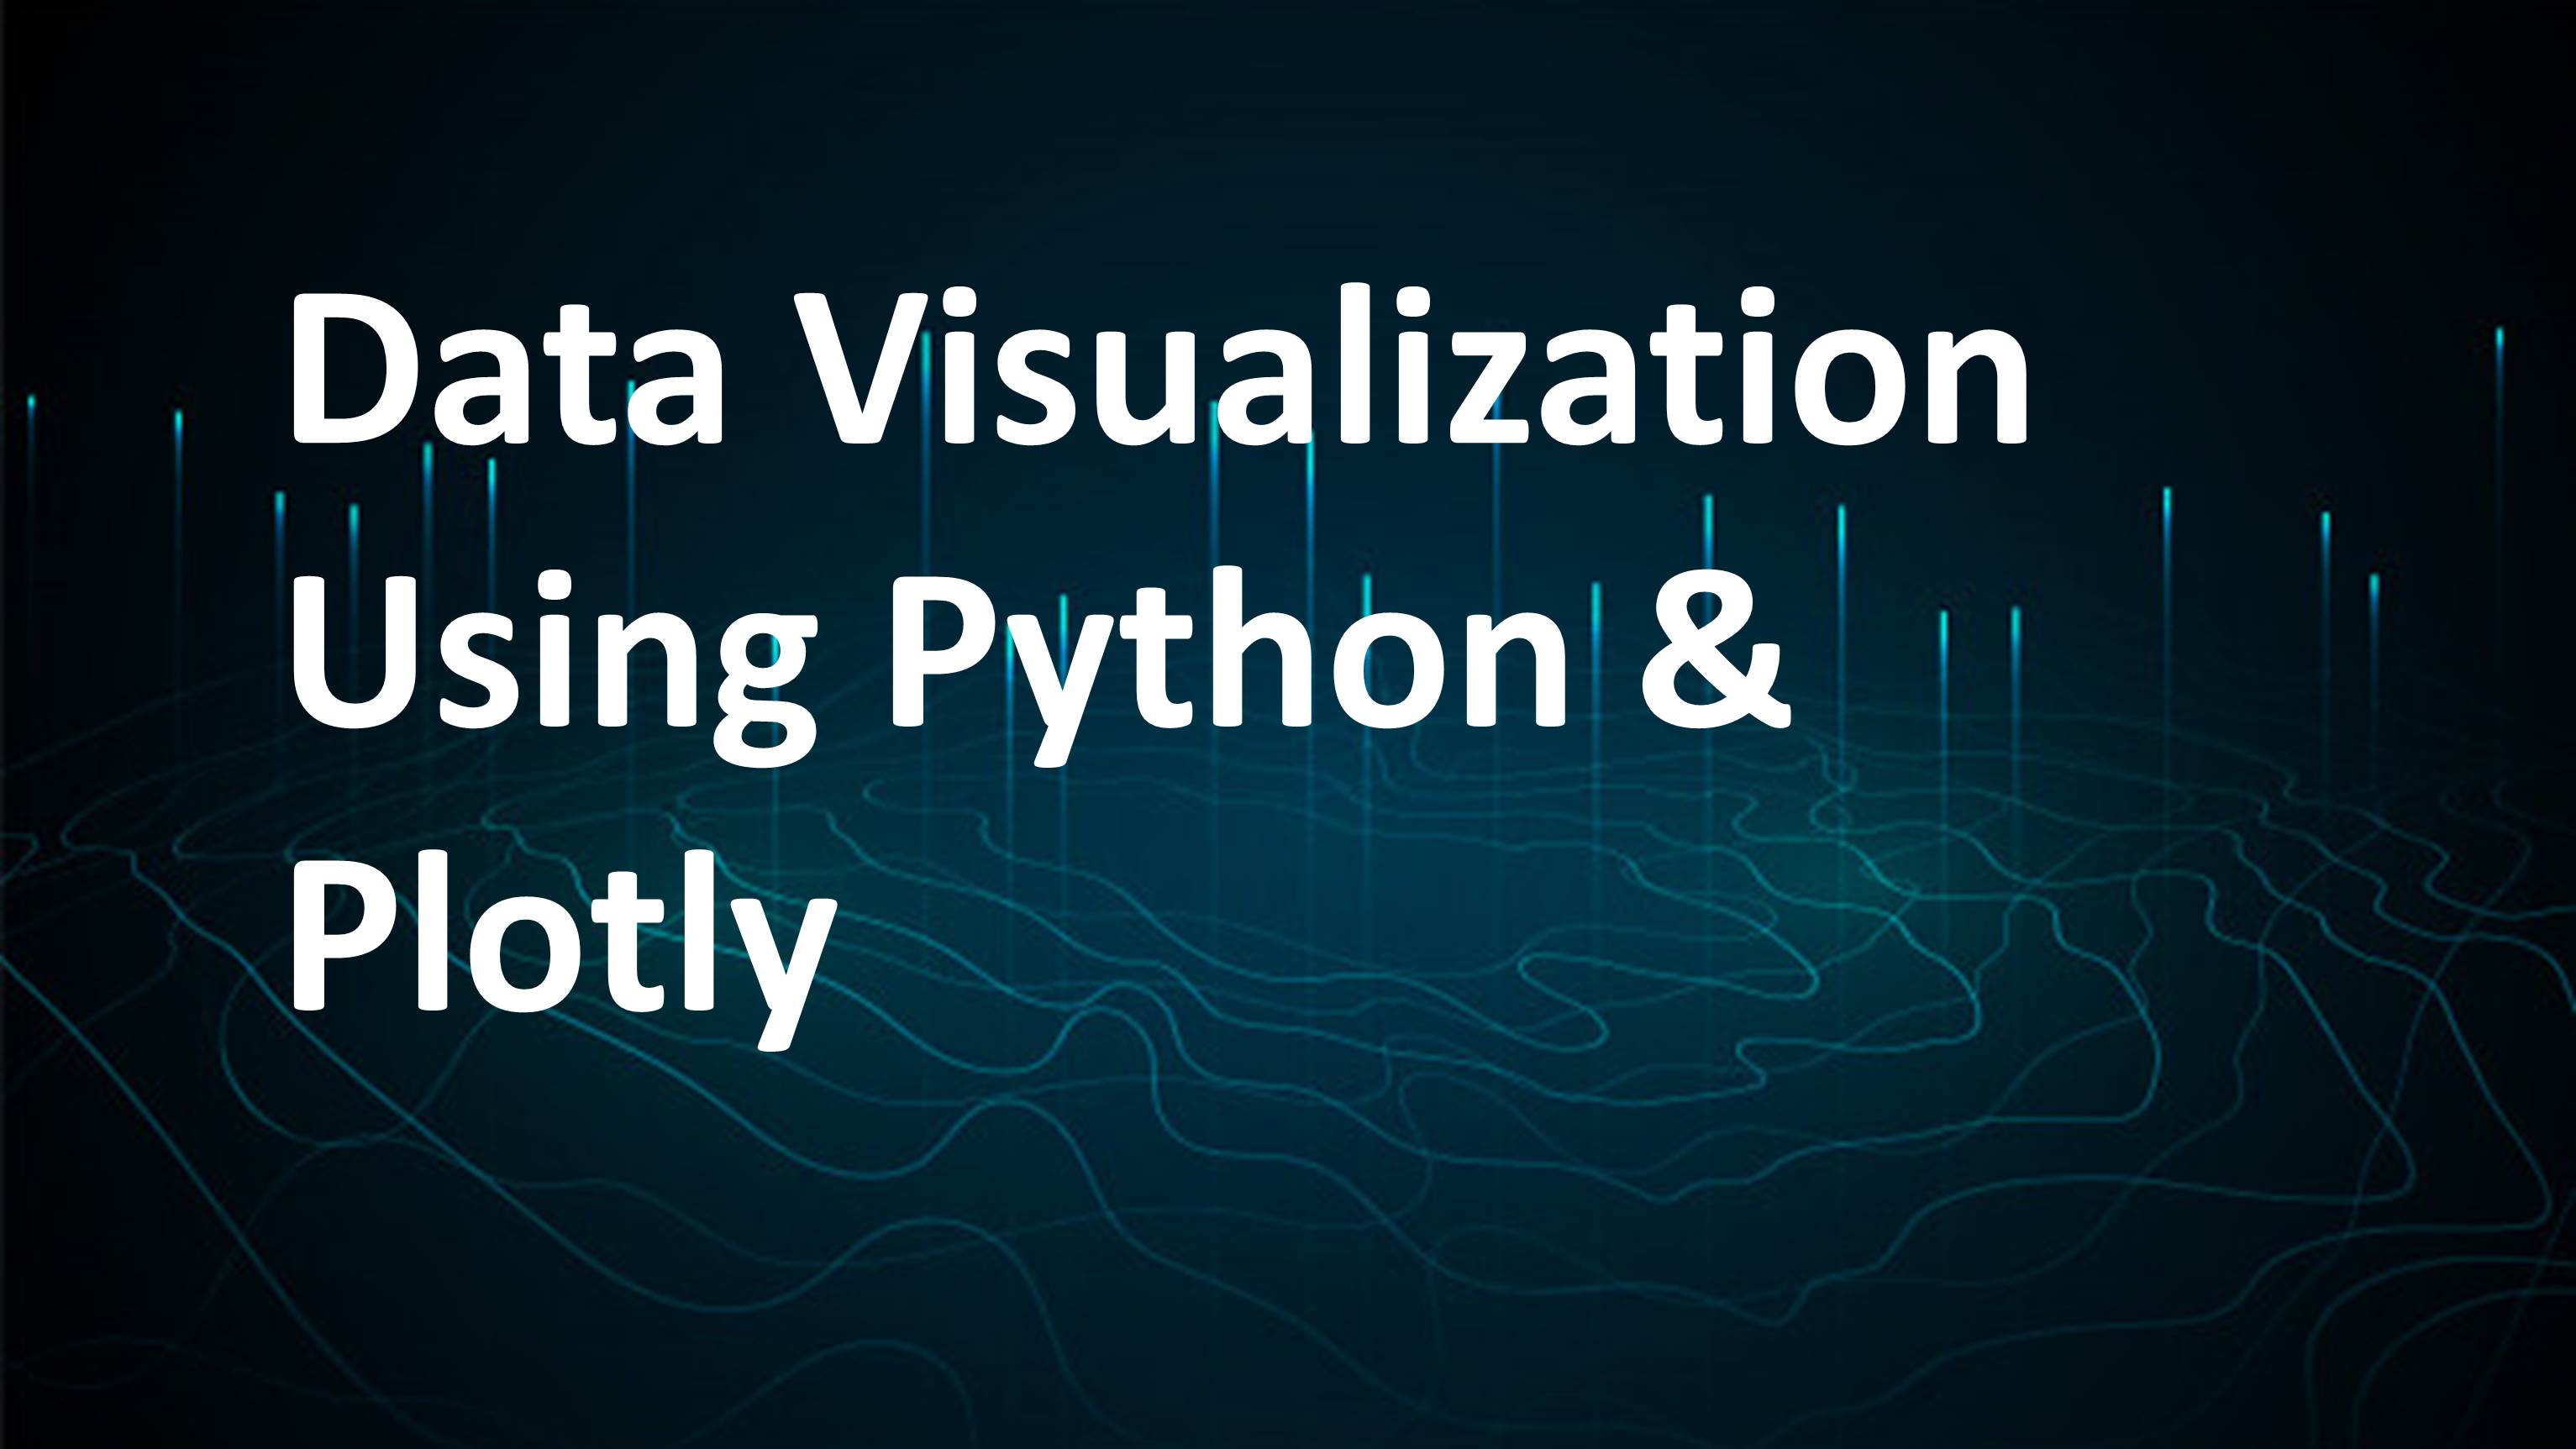 Data Visualizations Using Python and Plotly